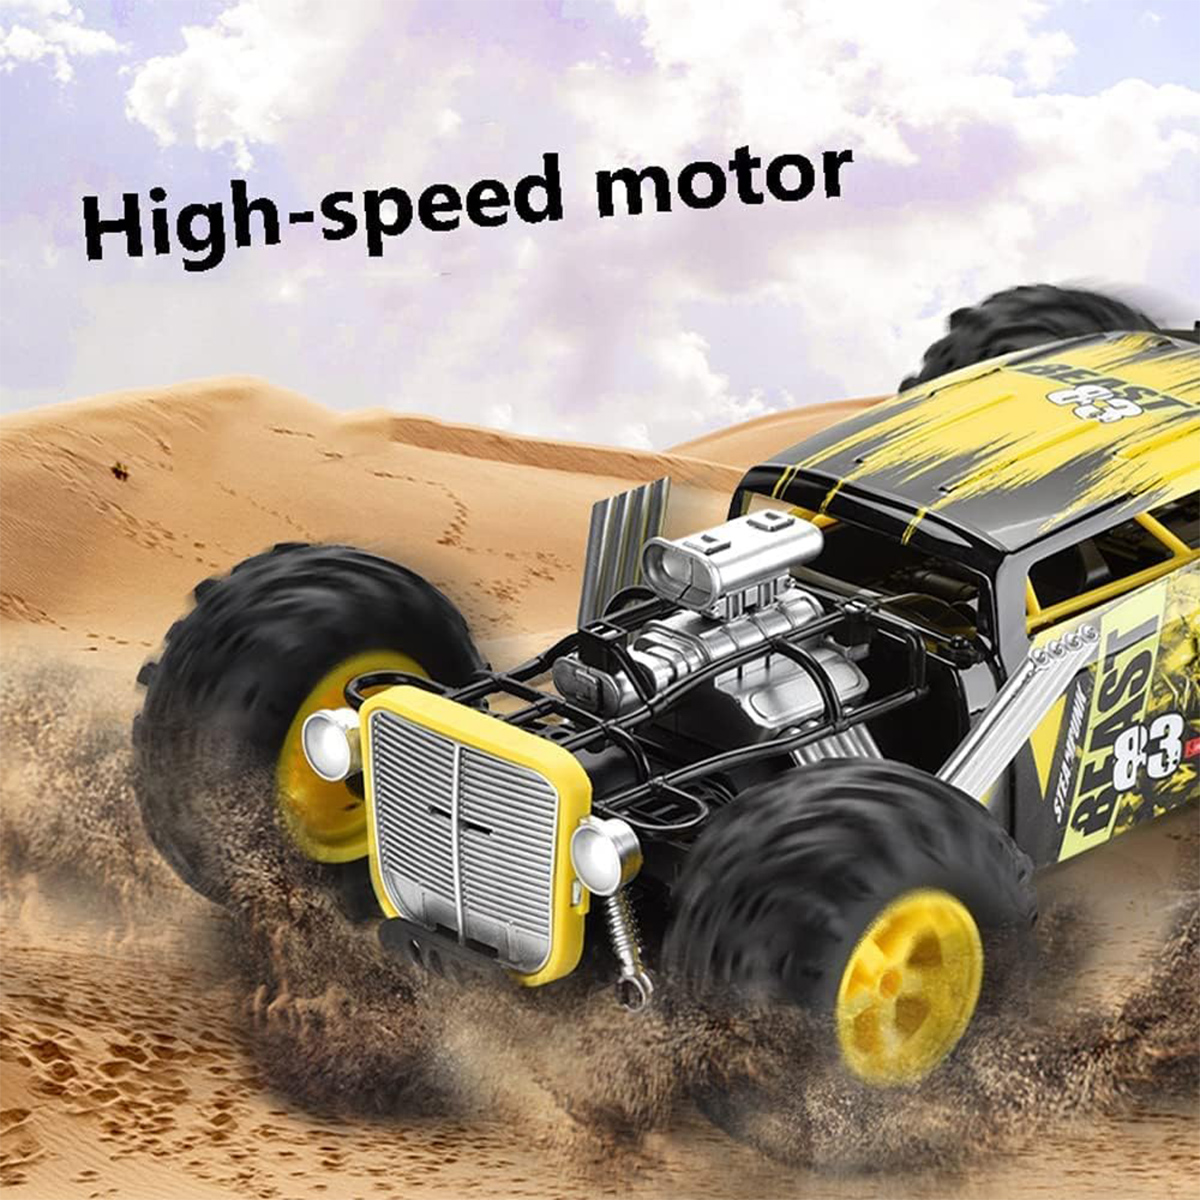 ماشین بازی کنترلی کریزون مدل  Rc Monster truck کد 2023